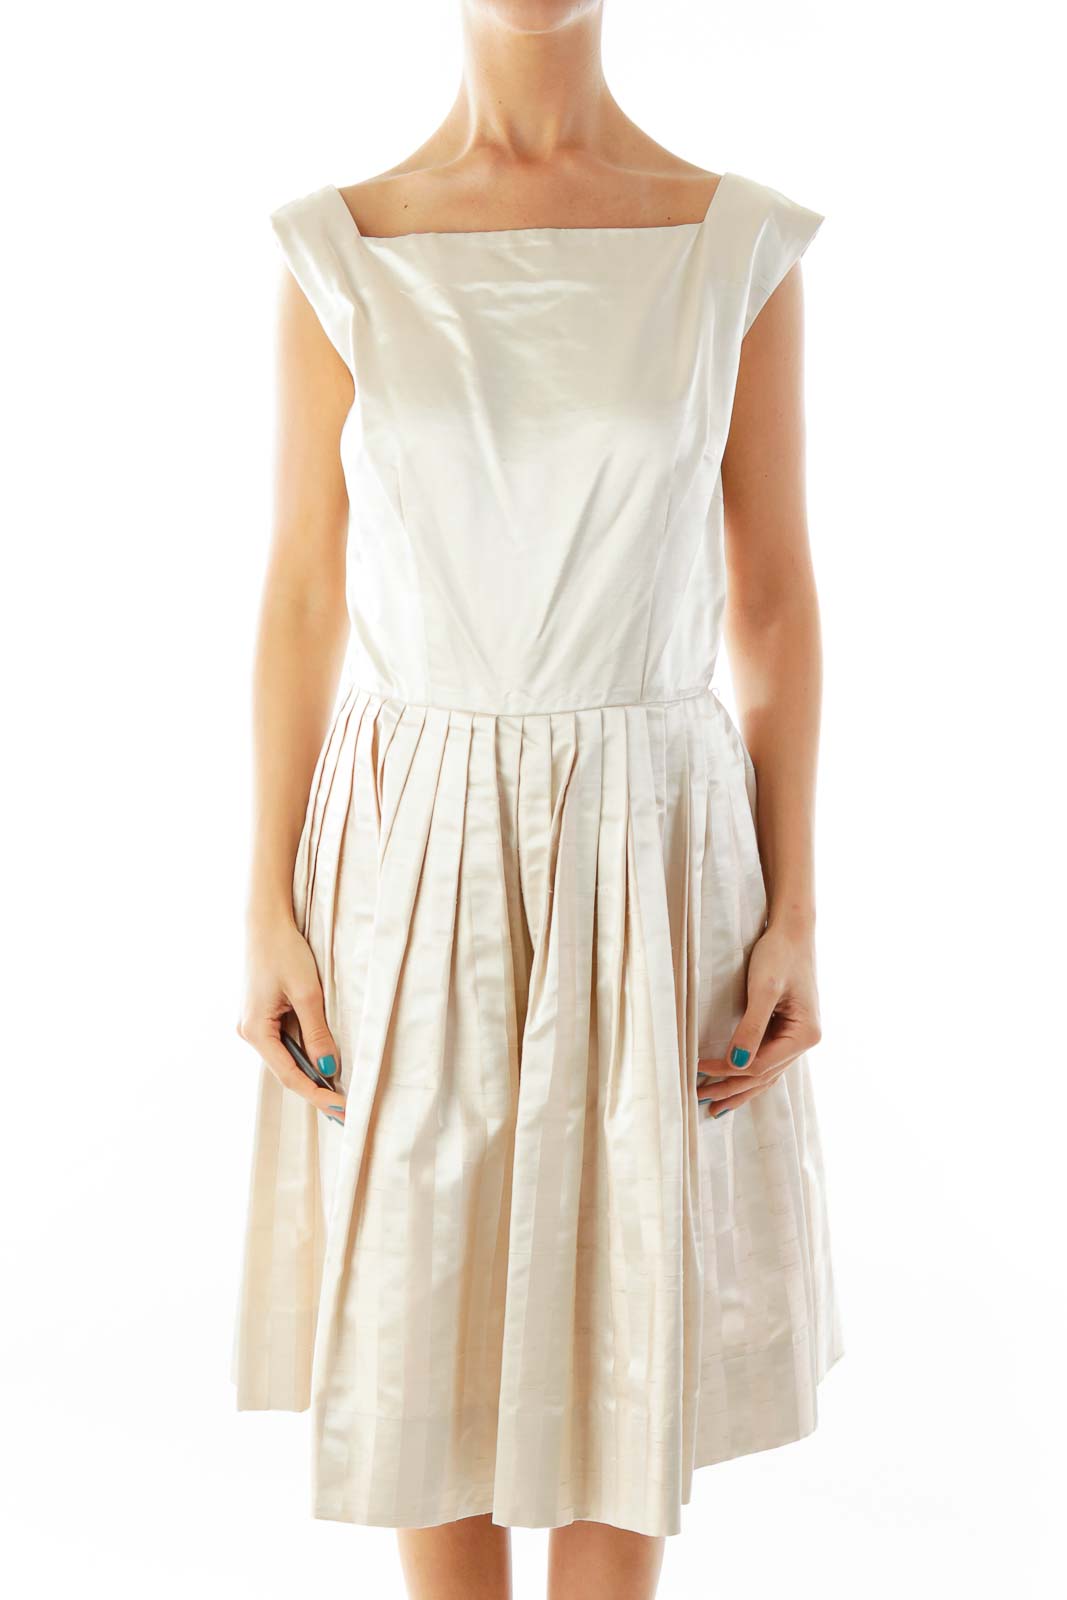 Cream Striped Bottom Dress Front